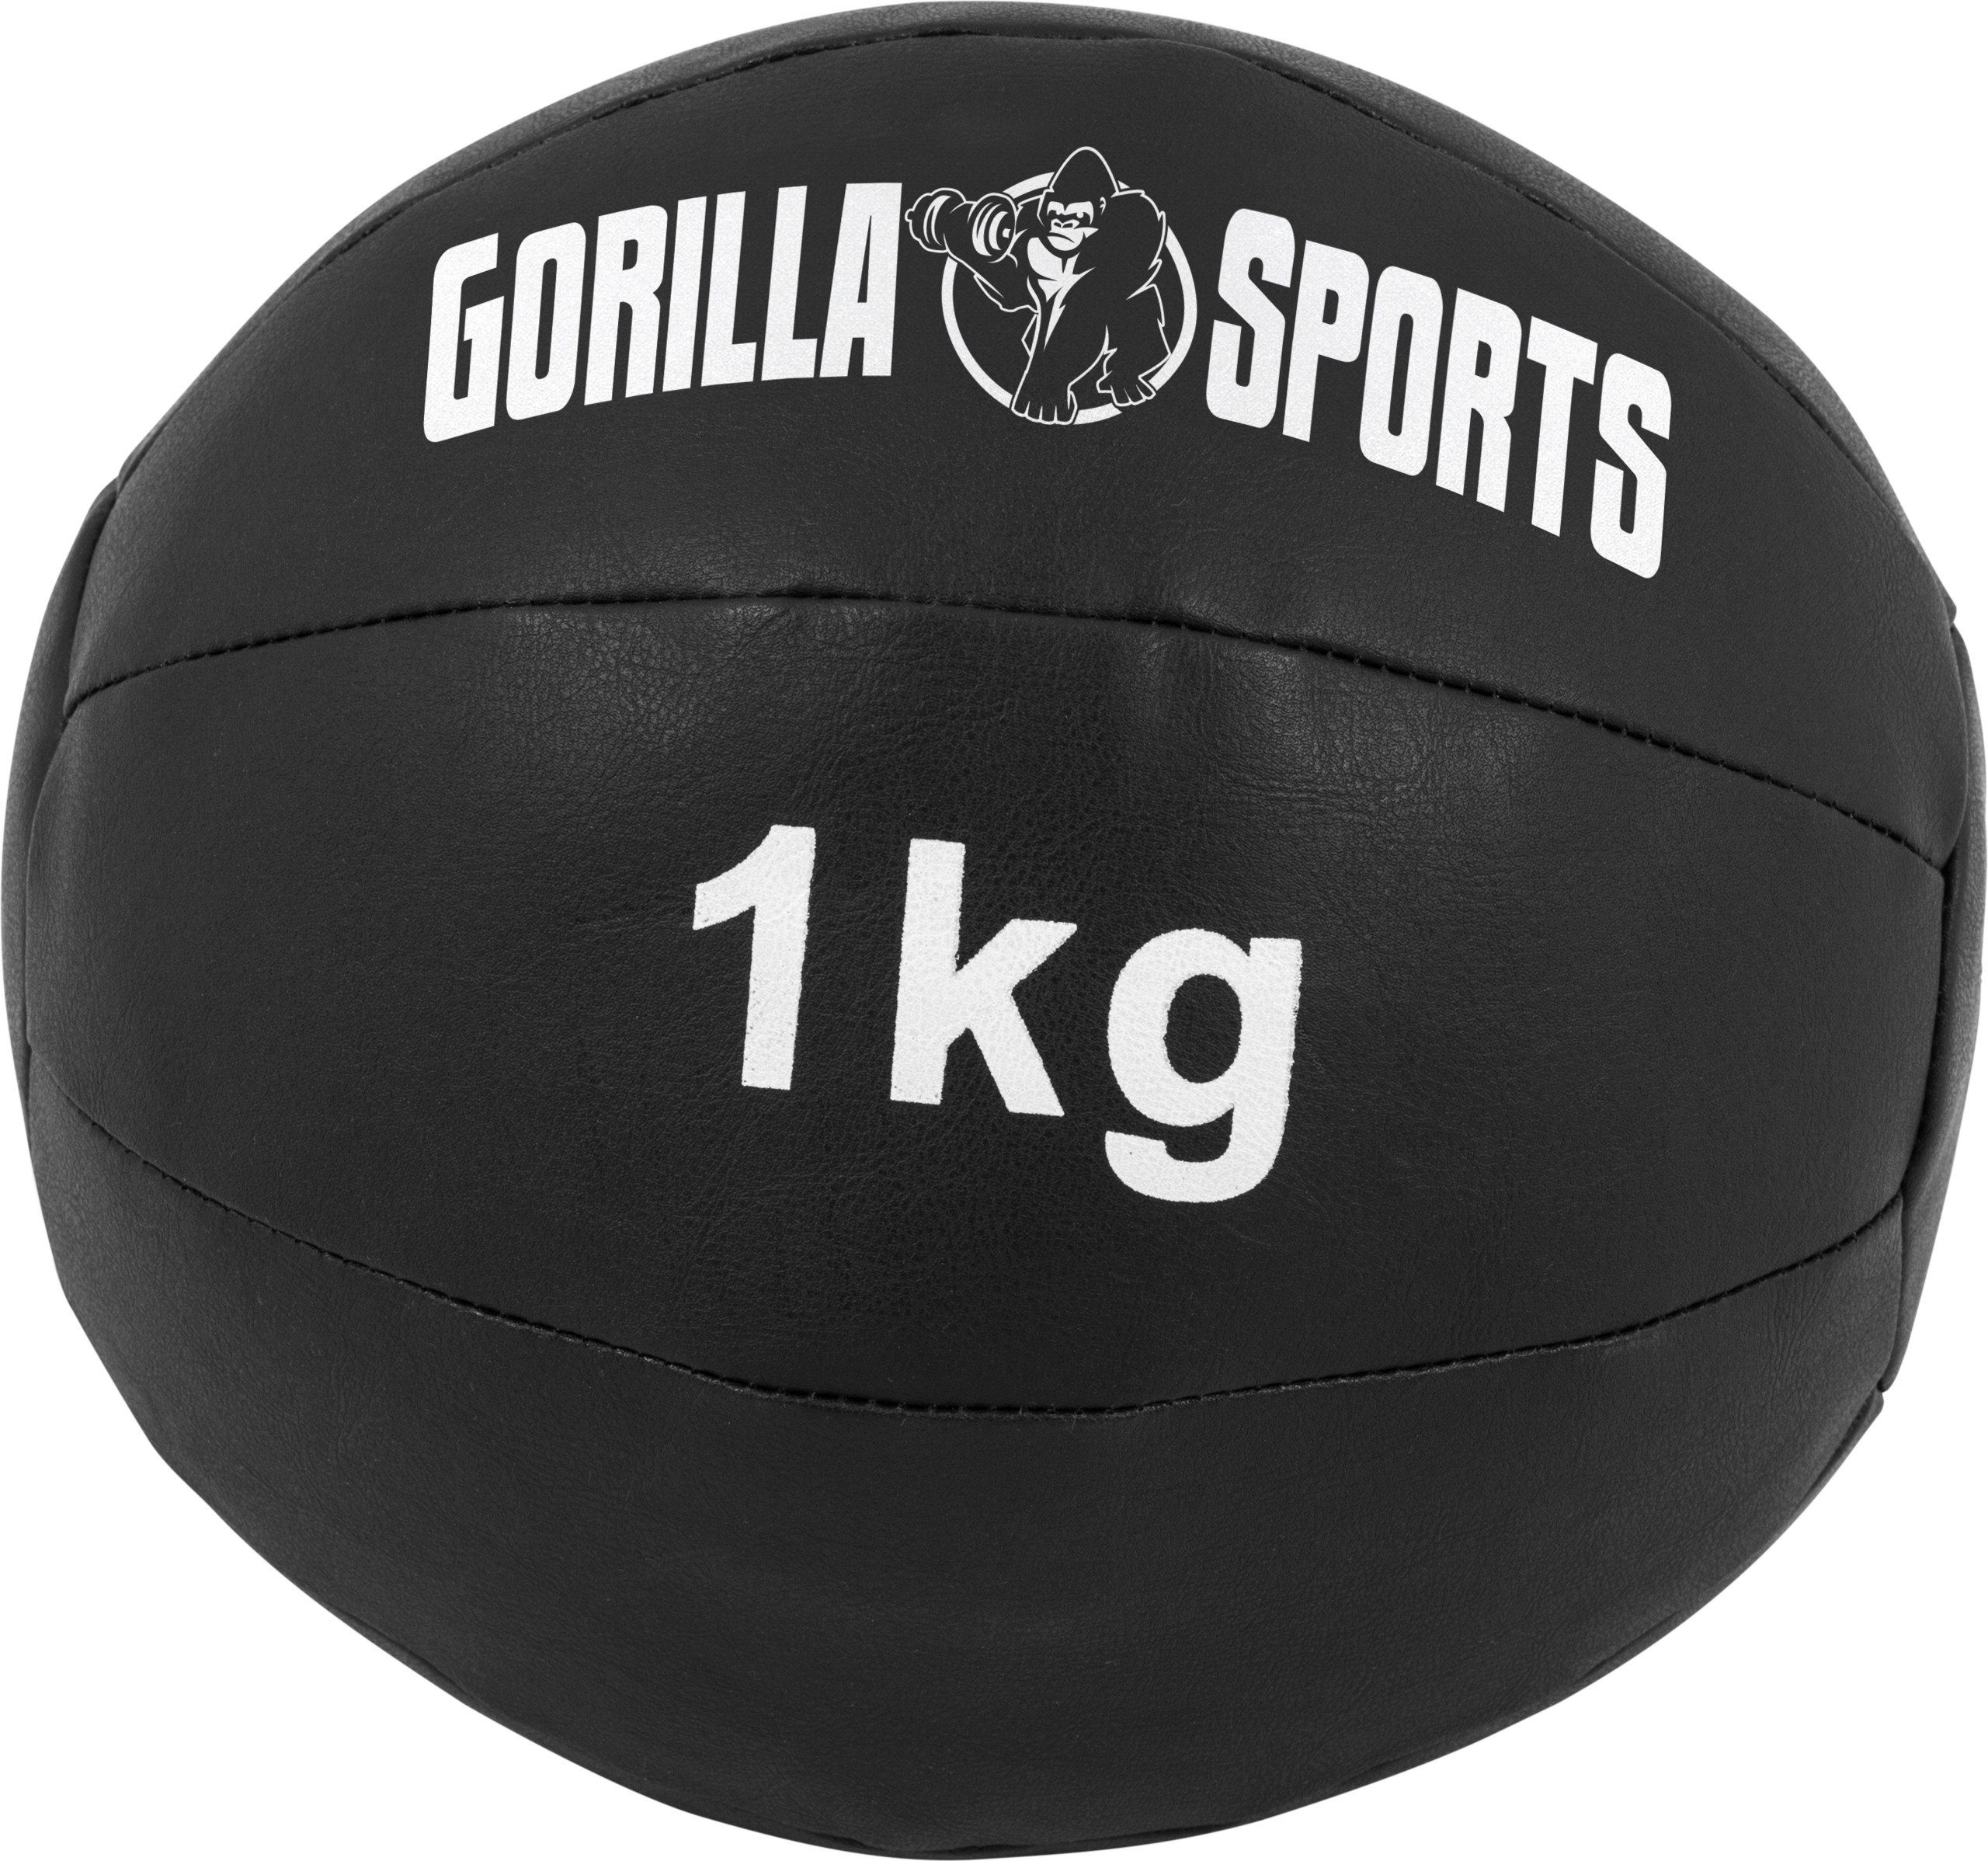 GORILLA SPORTS Medizinball Einzeln/Set, 29cm, aus Leder, Trainingsball, Fitnessball, Gewichtsball 1 kg